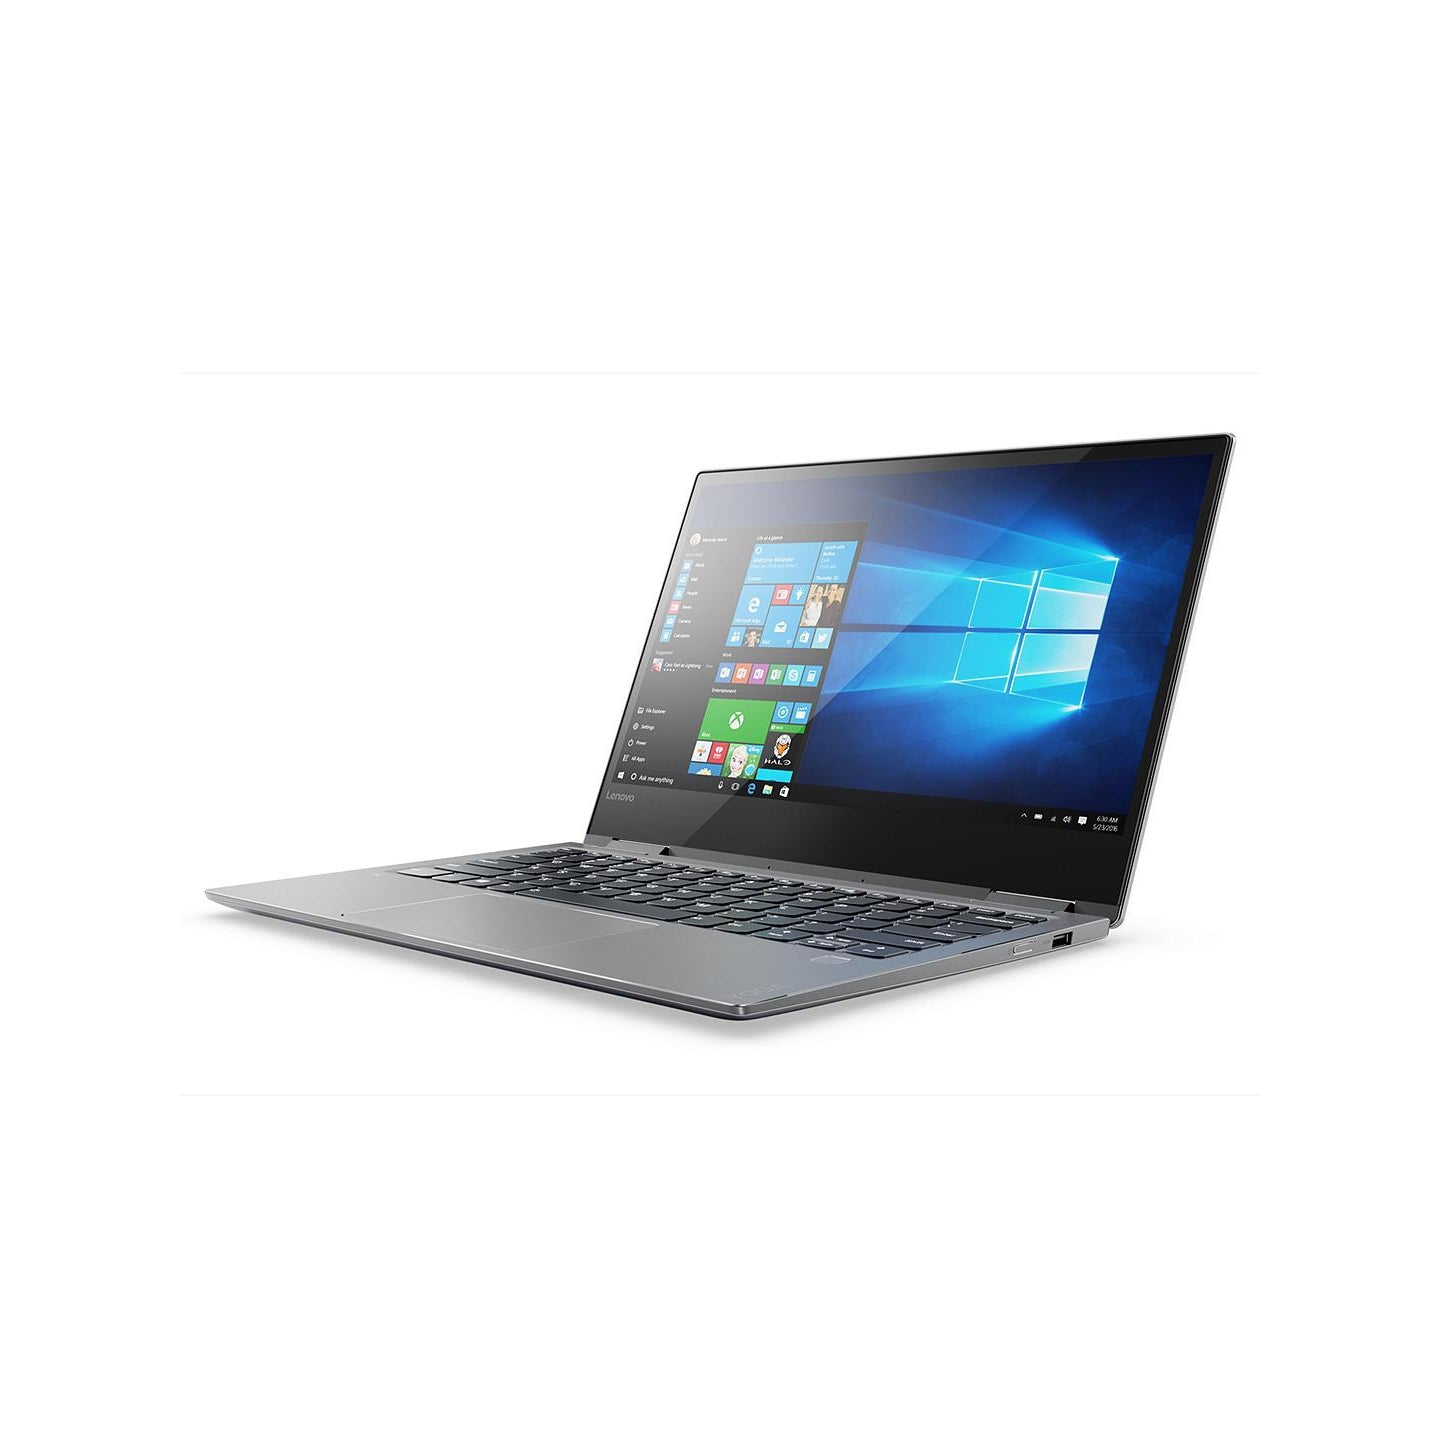 Lenovo Yoga 720 Convertible Laptop with Active Pen, Intel Core i5, 8GB RAM, 128GB SSD, 13.3” Full HD, Iron Grey